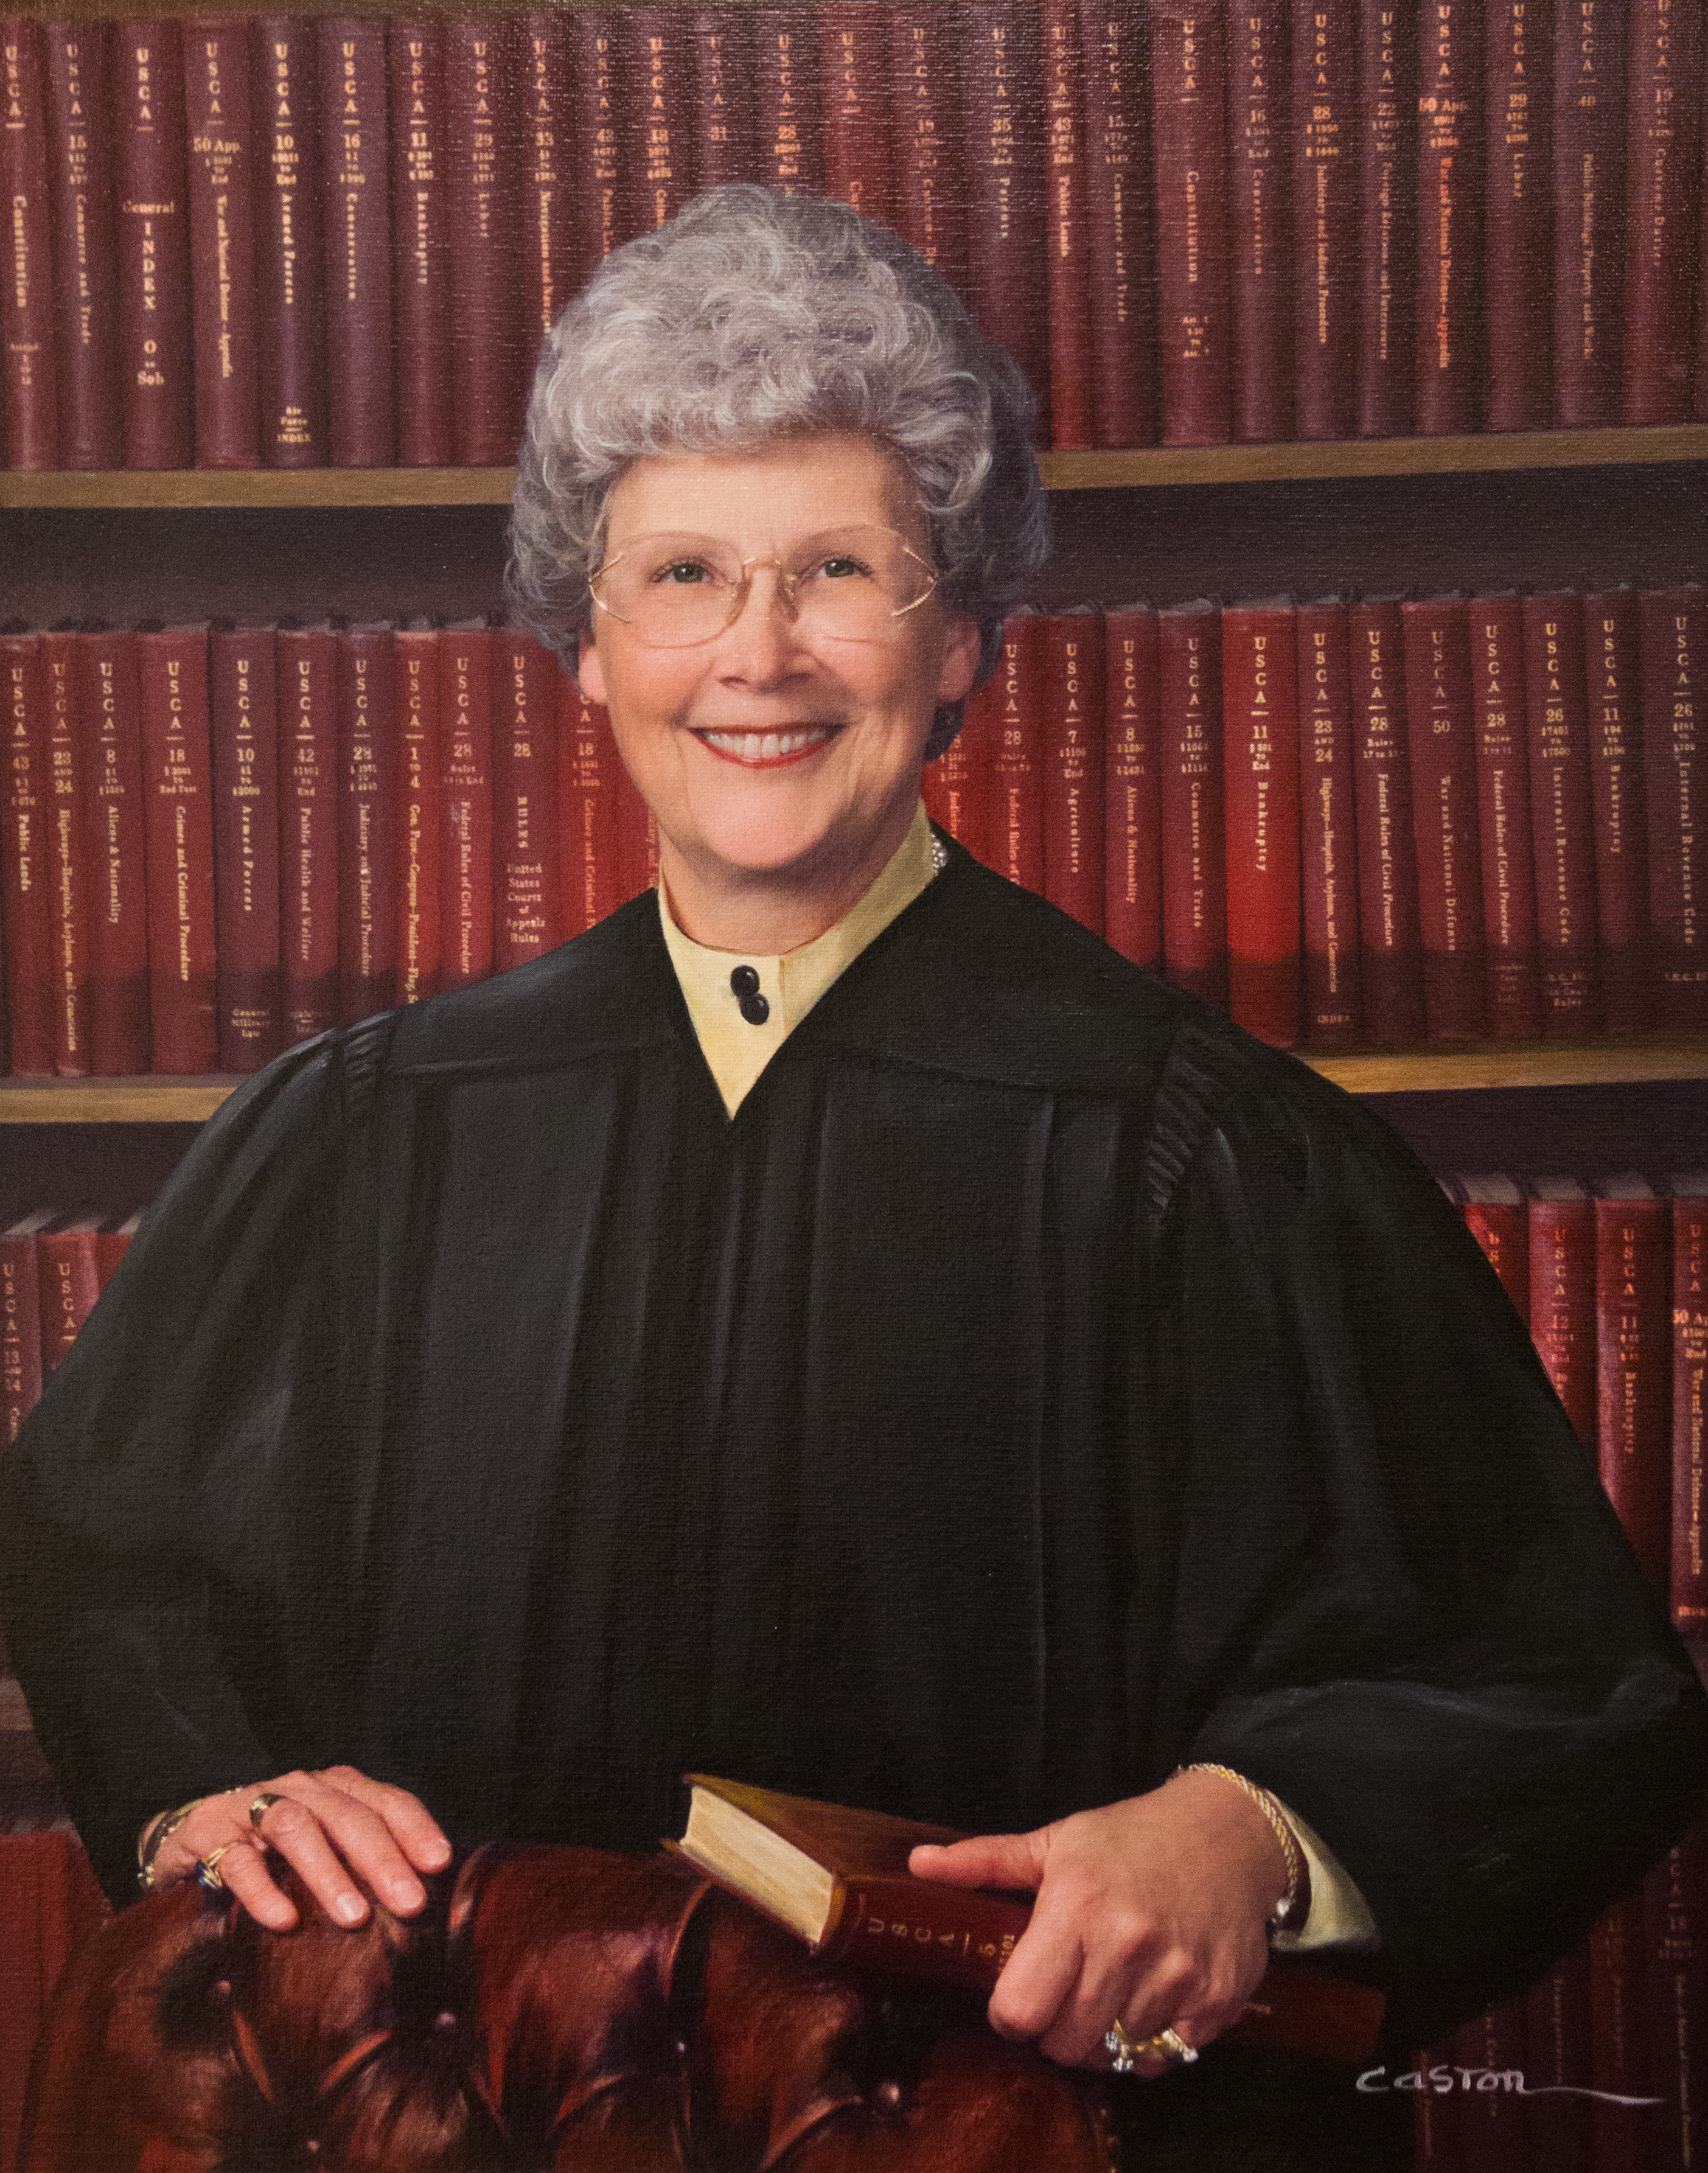 Judge Jean Harris Clements